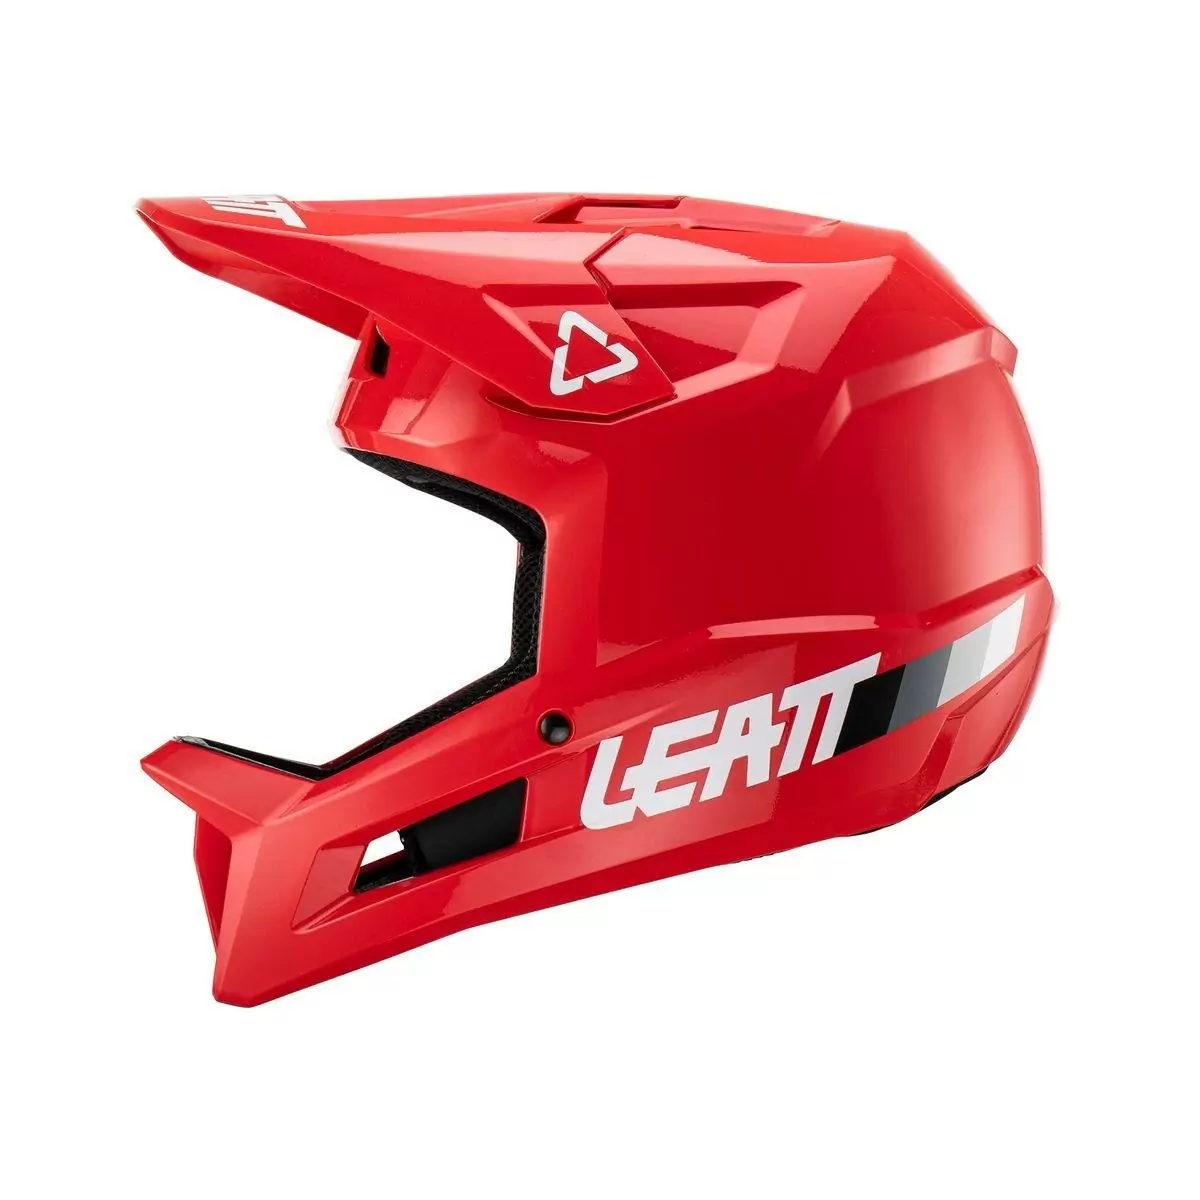 Gravity 1.0 MTB Fullface Helmet Red Size XL (61-62cm) #1